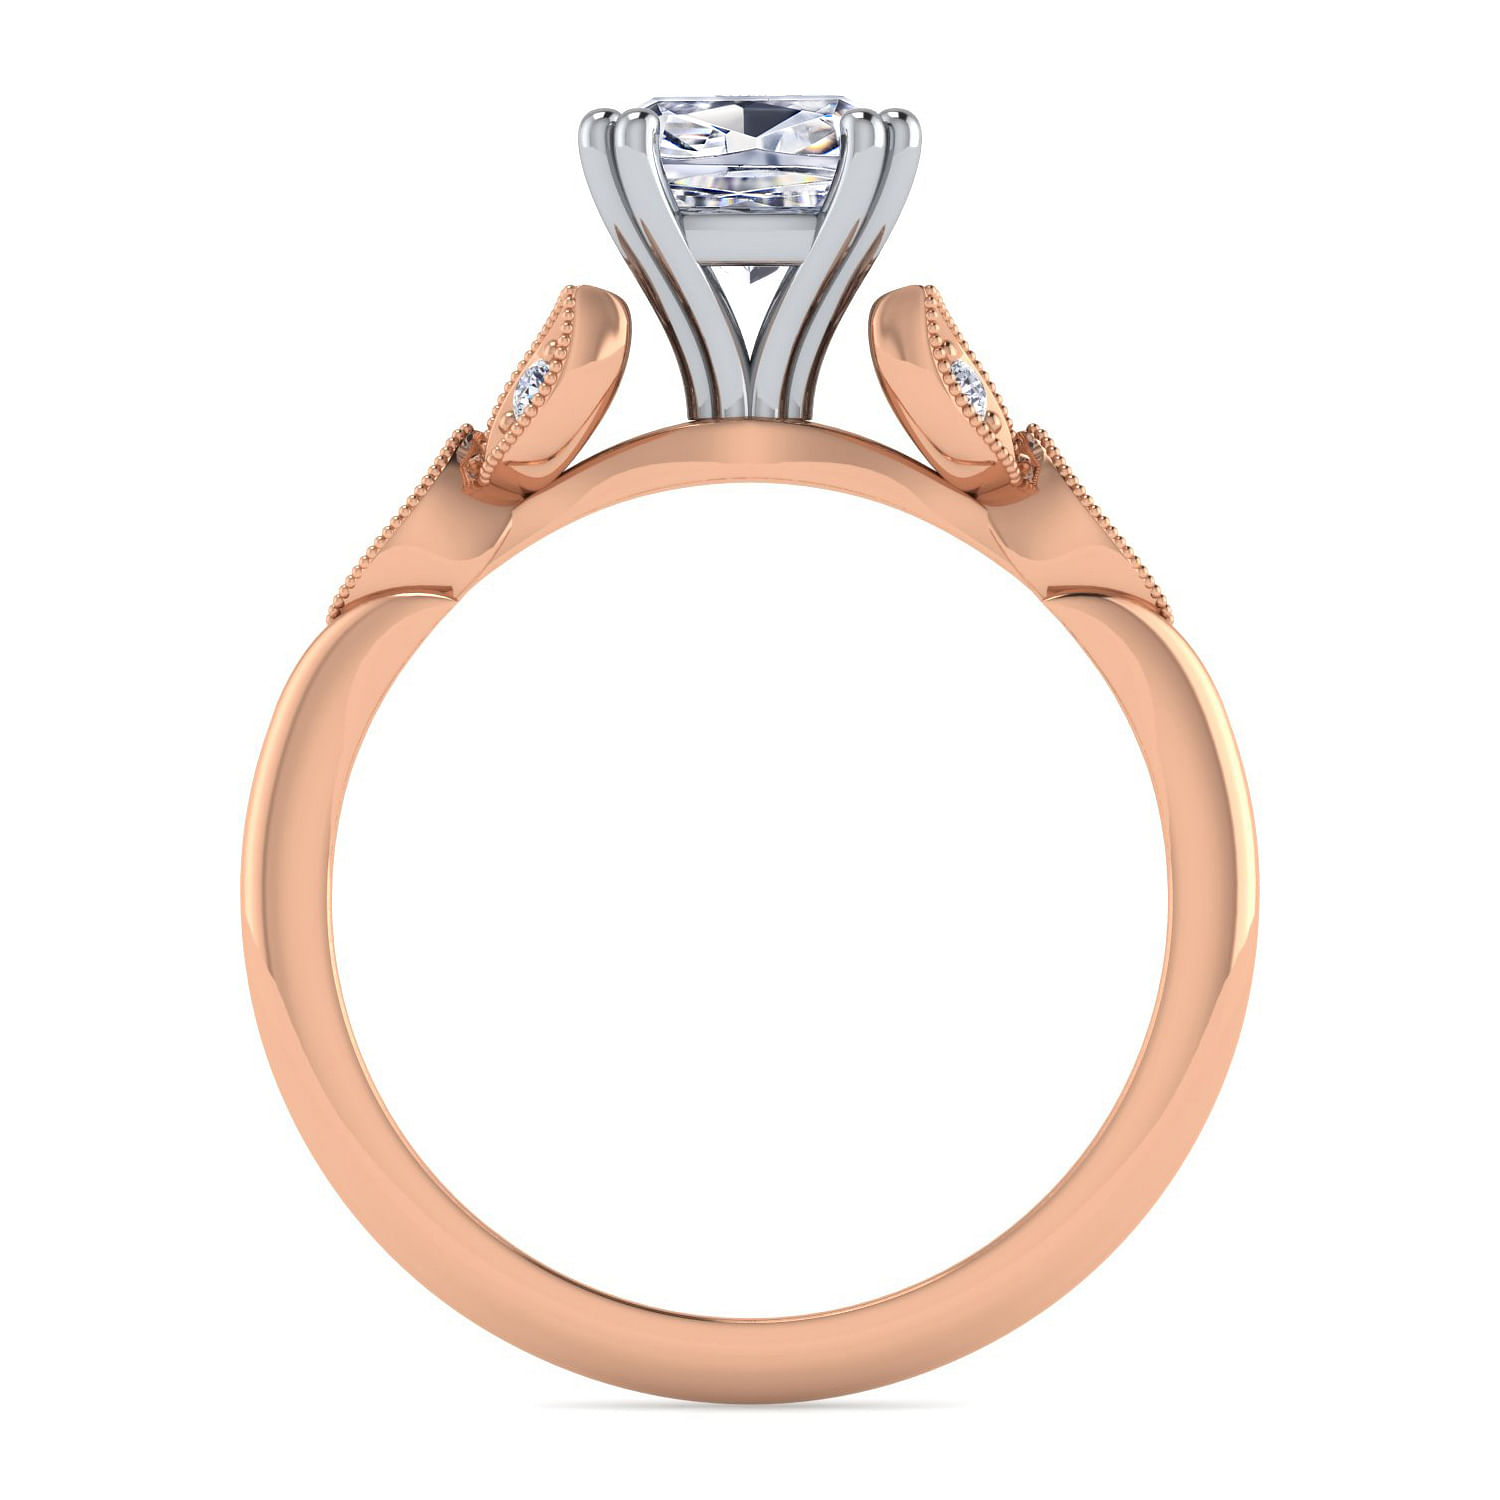 Vintage Inspired 14K White-Rose Gold Cushion Cut Diamond Engagement Ring